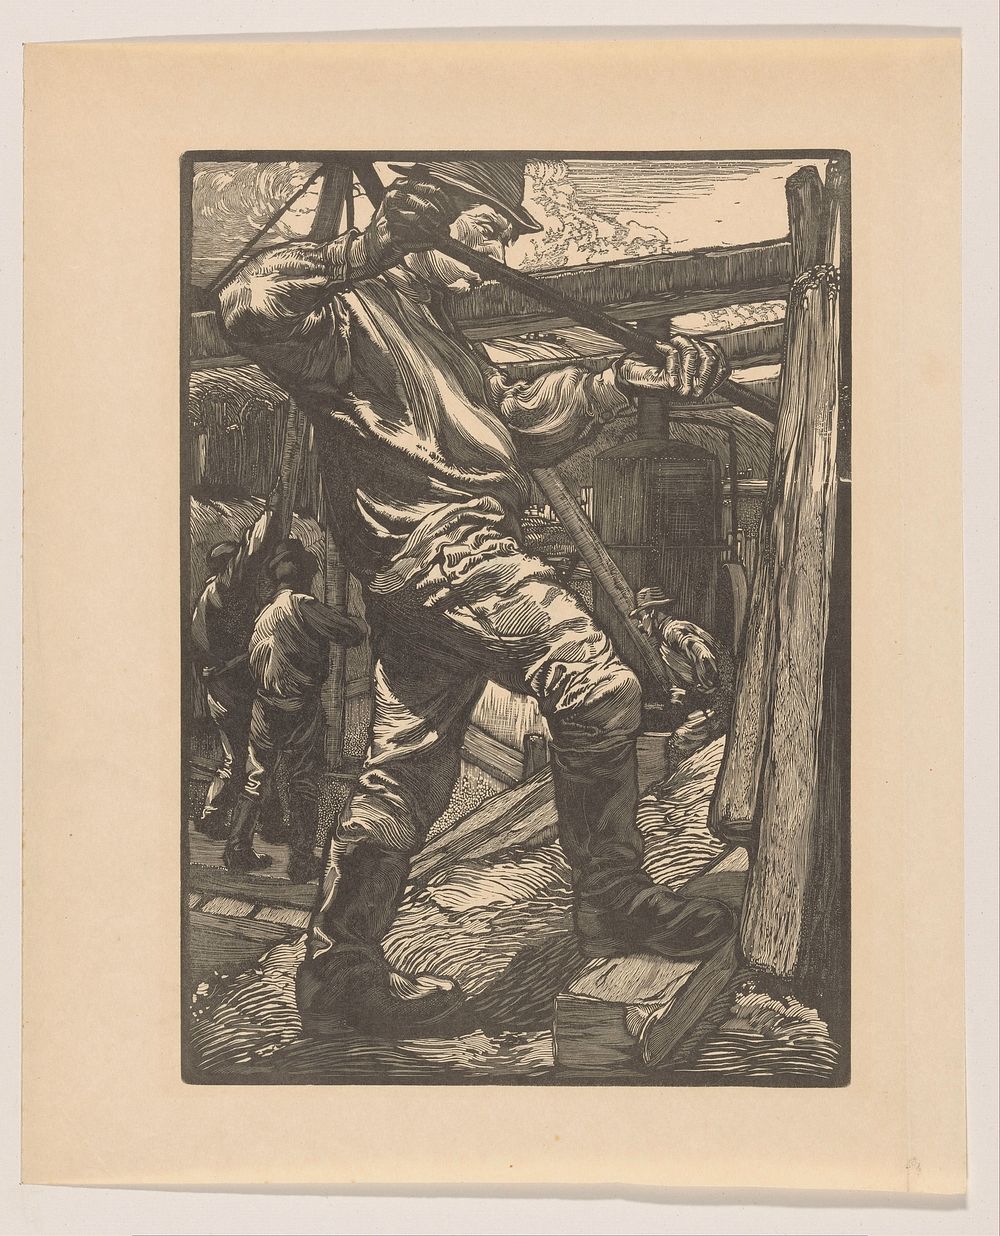 Wrikkende arbeider (1881 - 1934) by Johannes Josephus Aarts